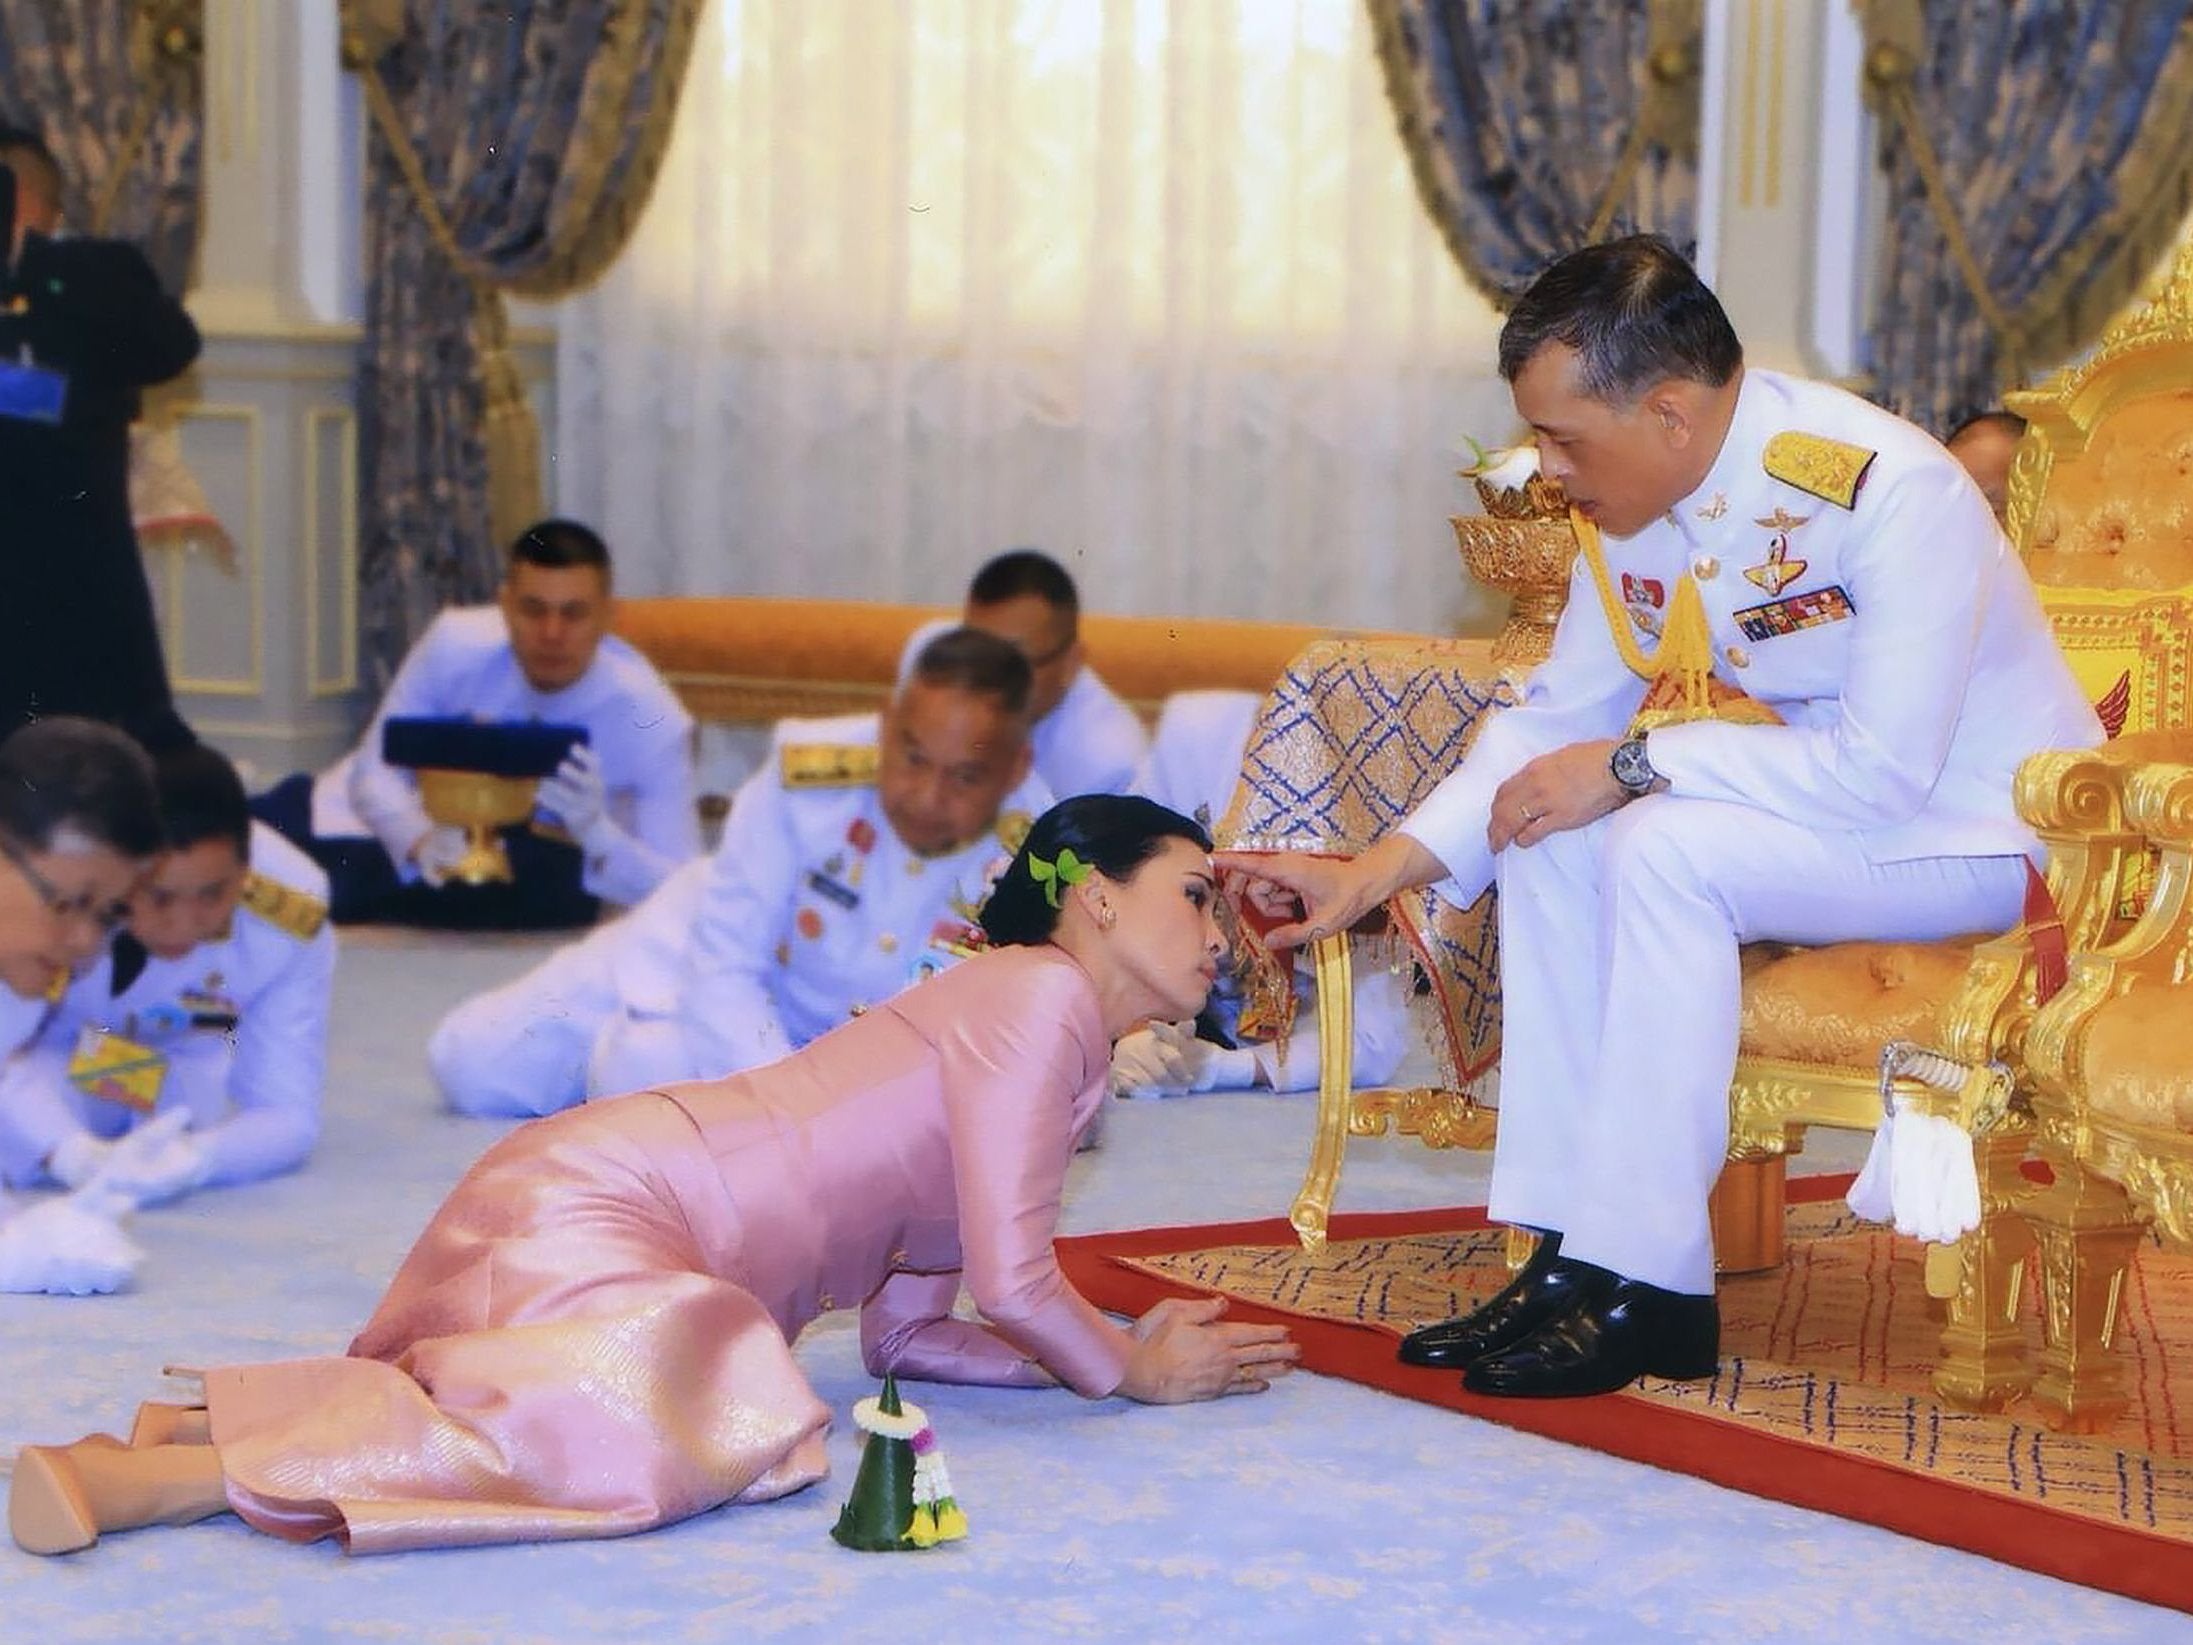 Royal King Sex Videos - Thai king Vajiralongkorn marries bodyguard making her queen | The ...